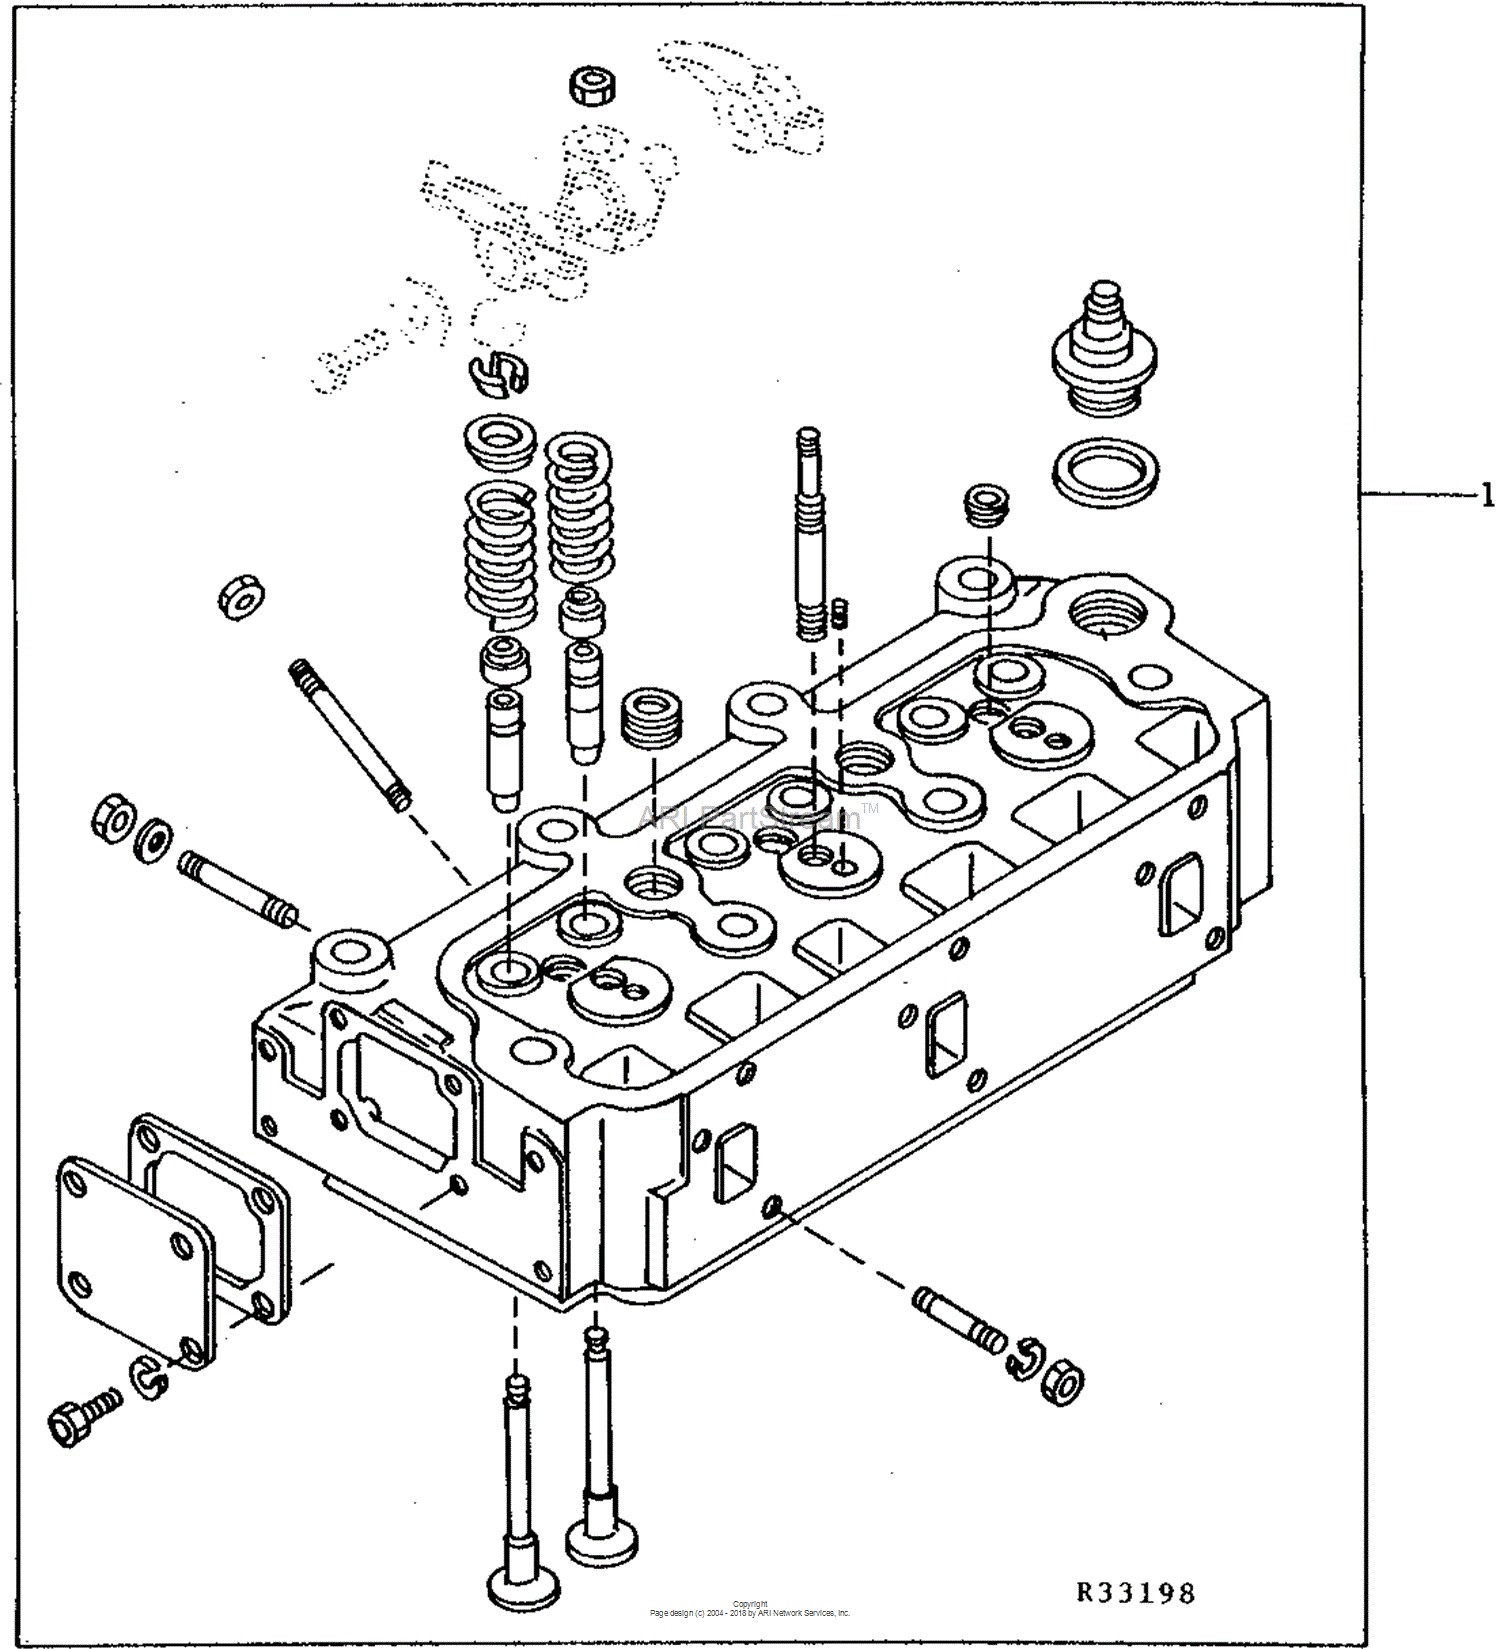 John Deere 1050 Parts Diagram Car Interior Design